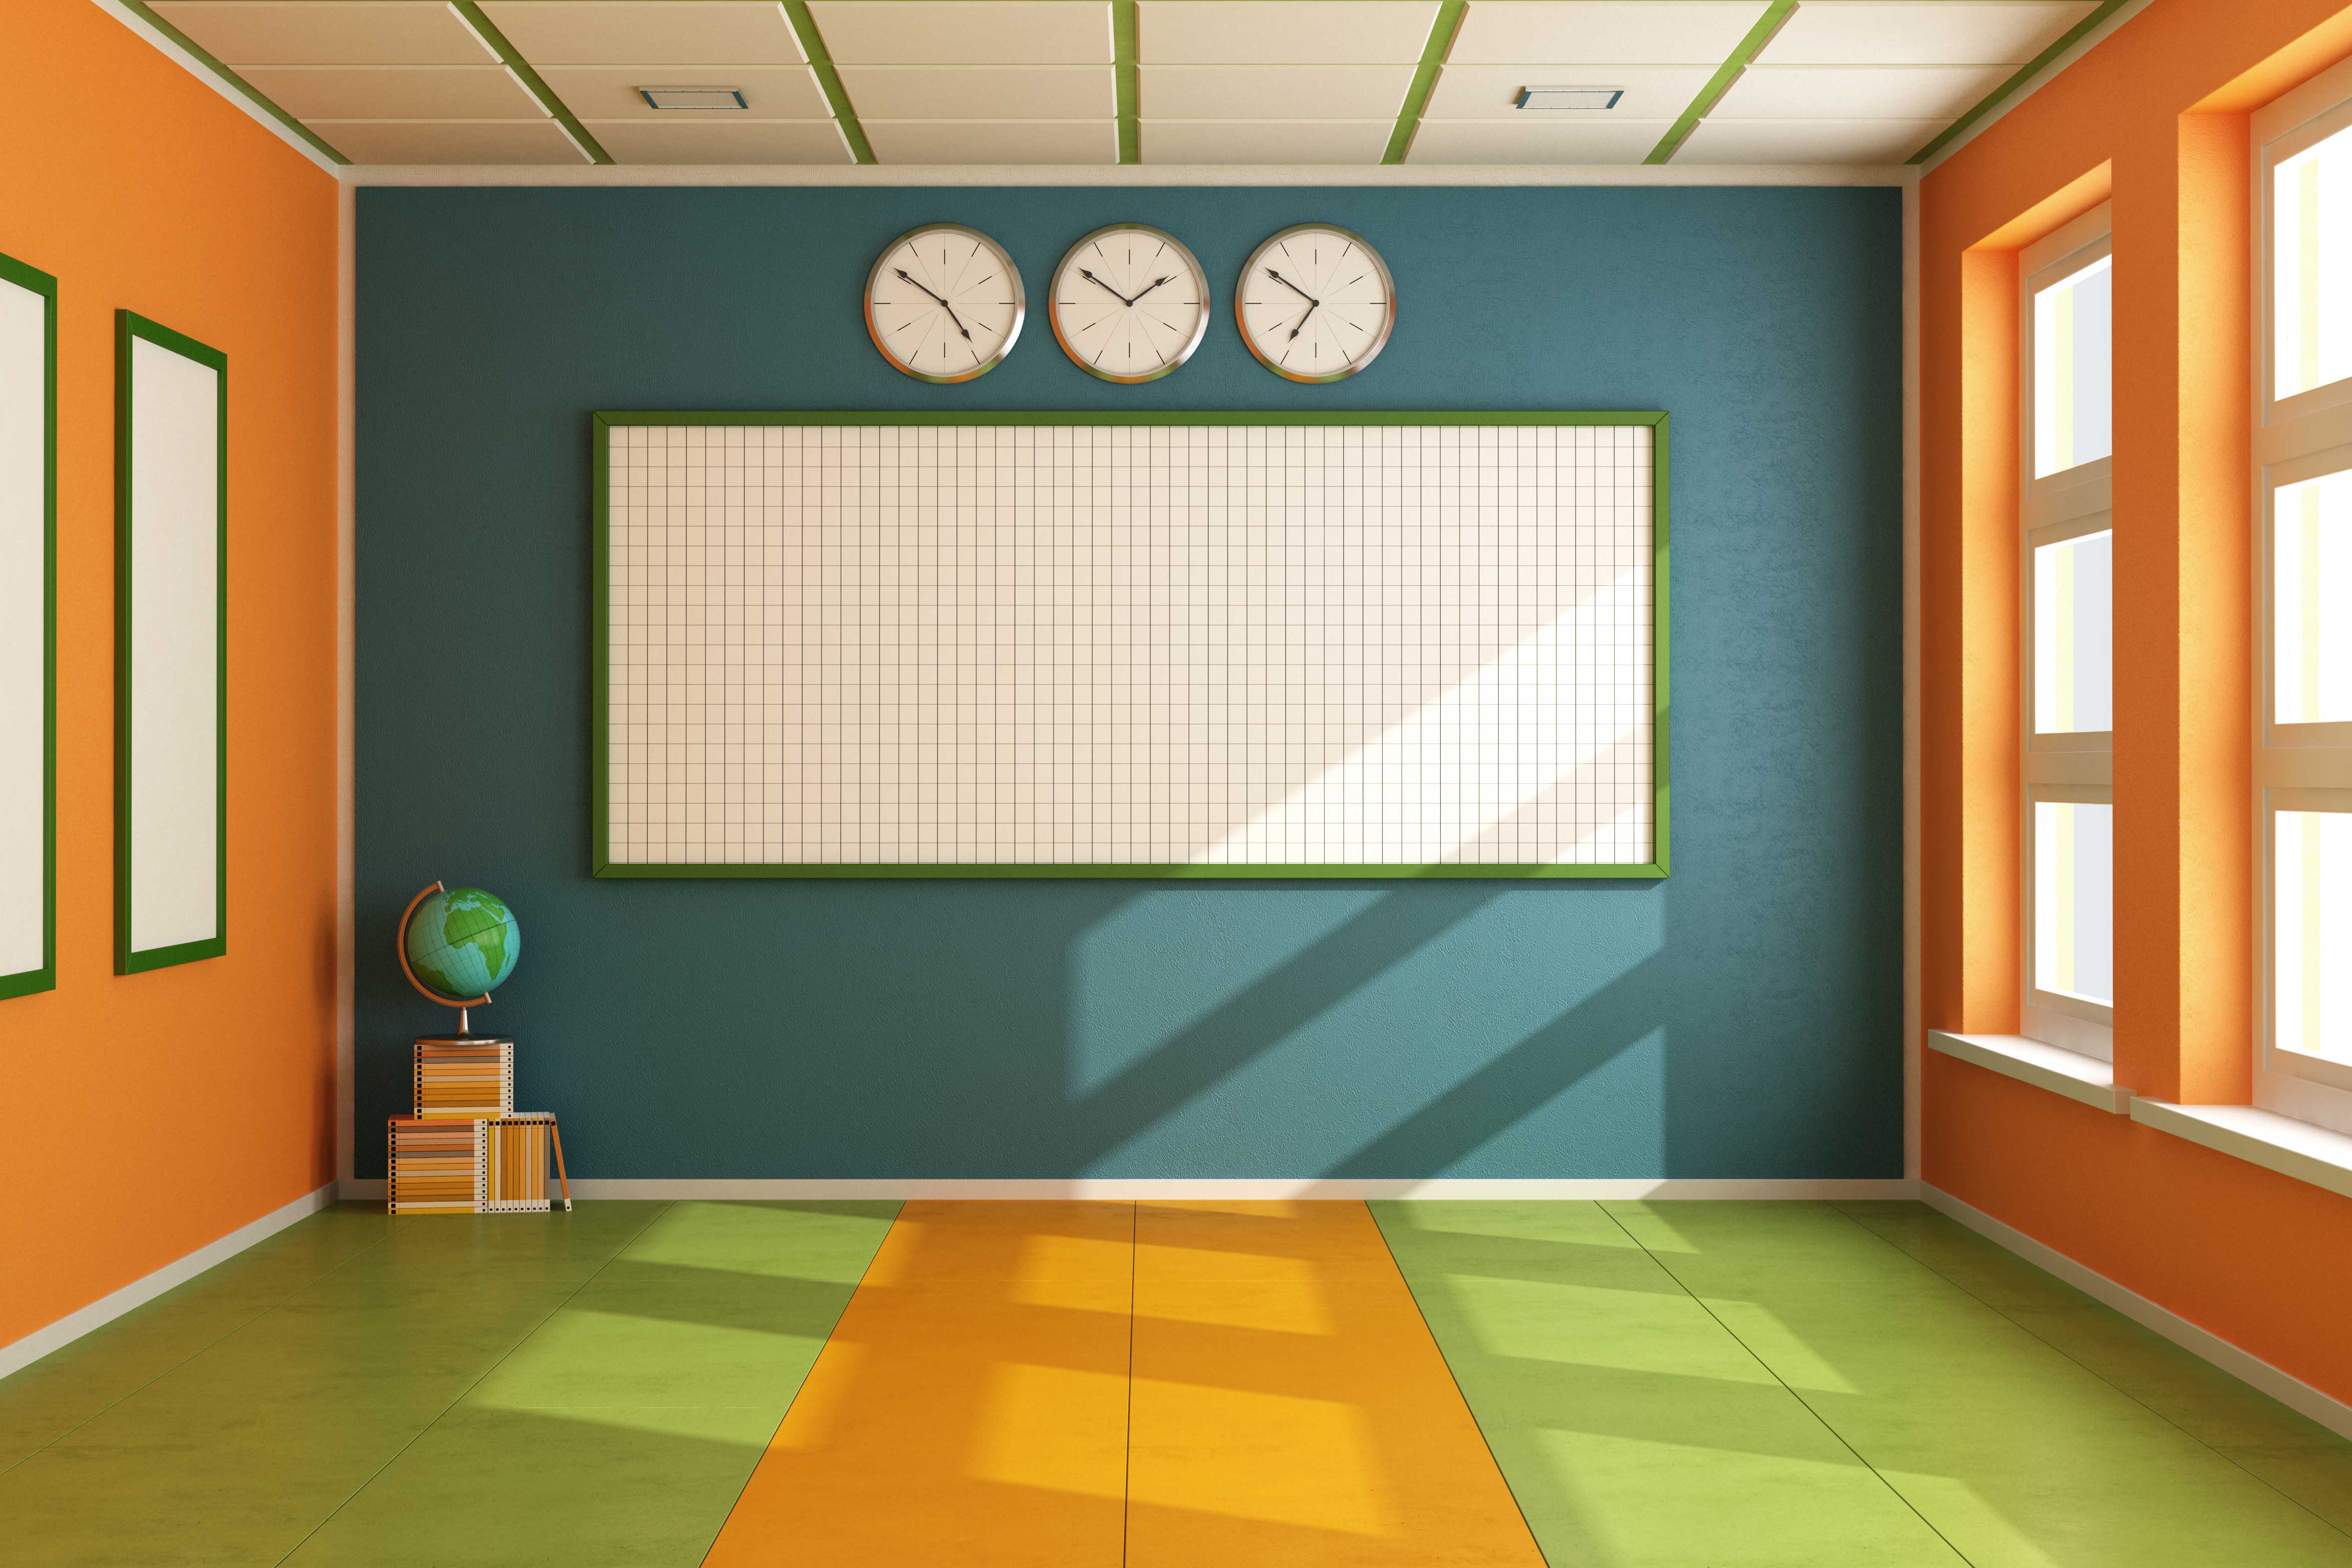 Classroom - Clipart - Empty Cartoon Classroom Background - 4710x3140  Wallpaper 